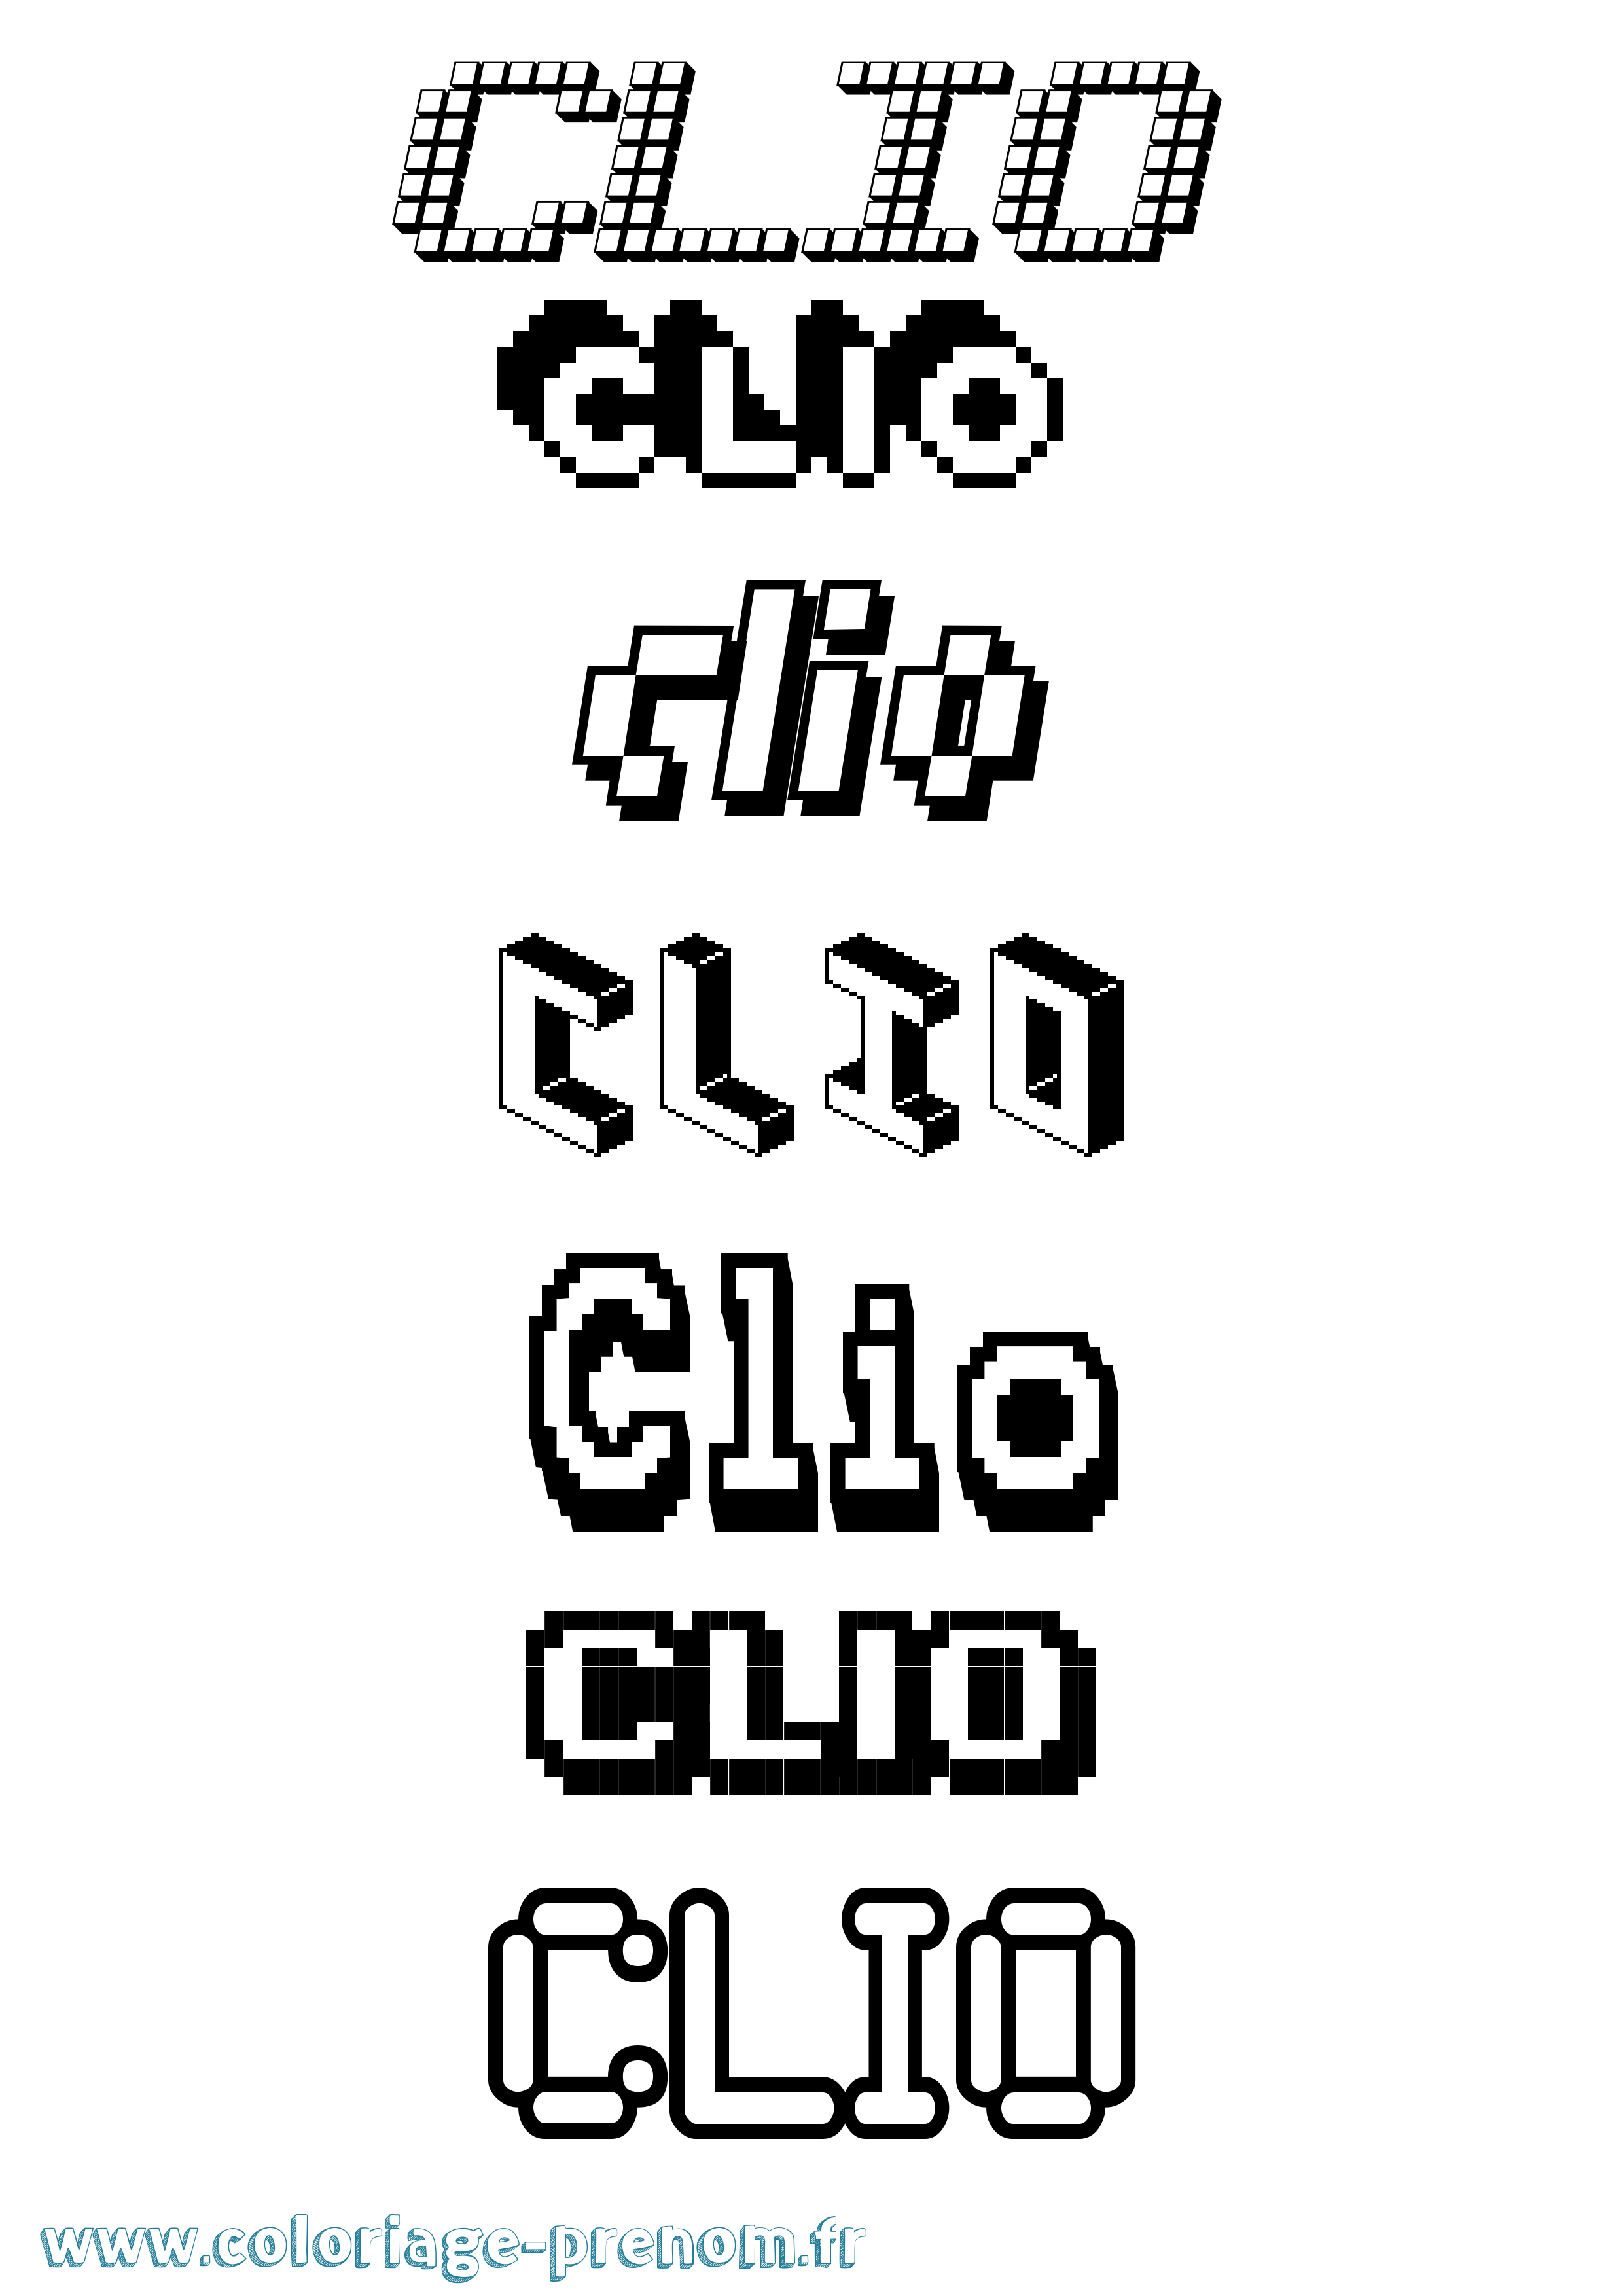 Coloriage prénom Clio Pixel